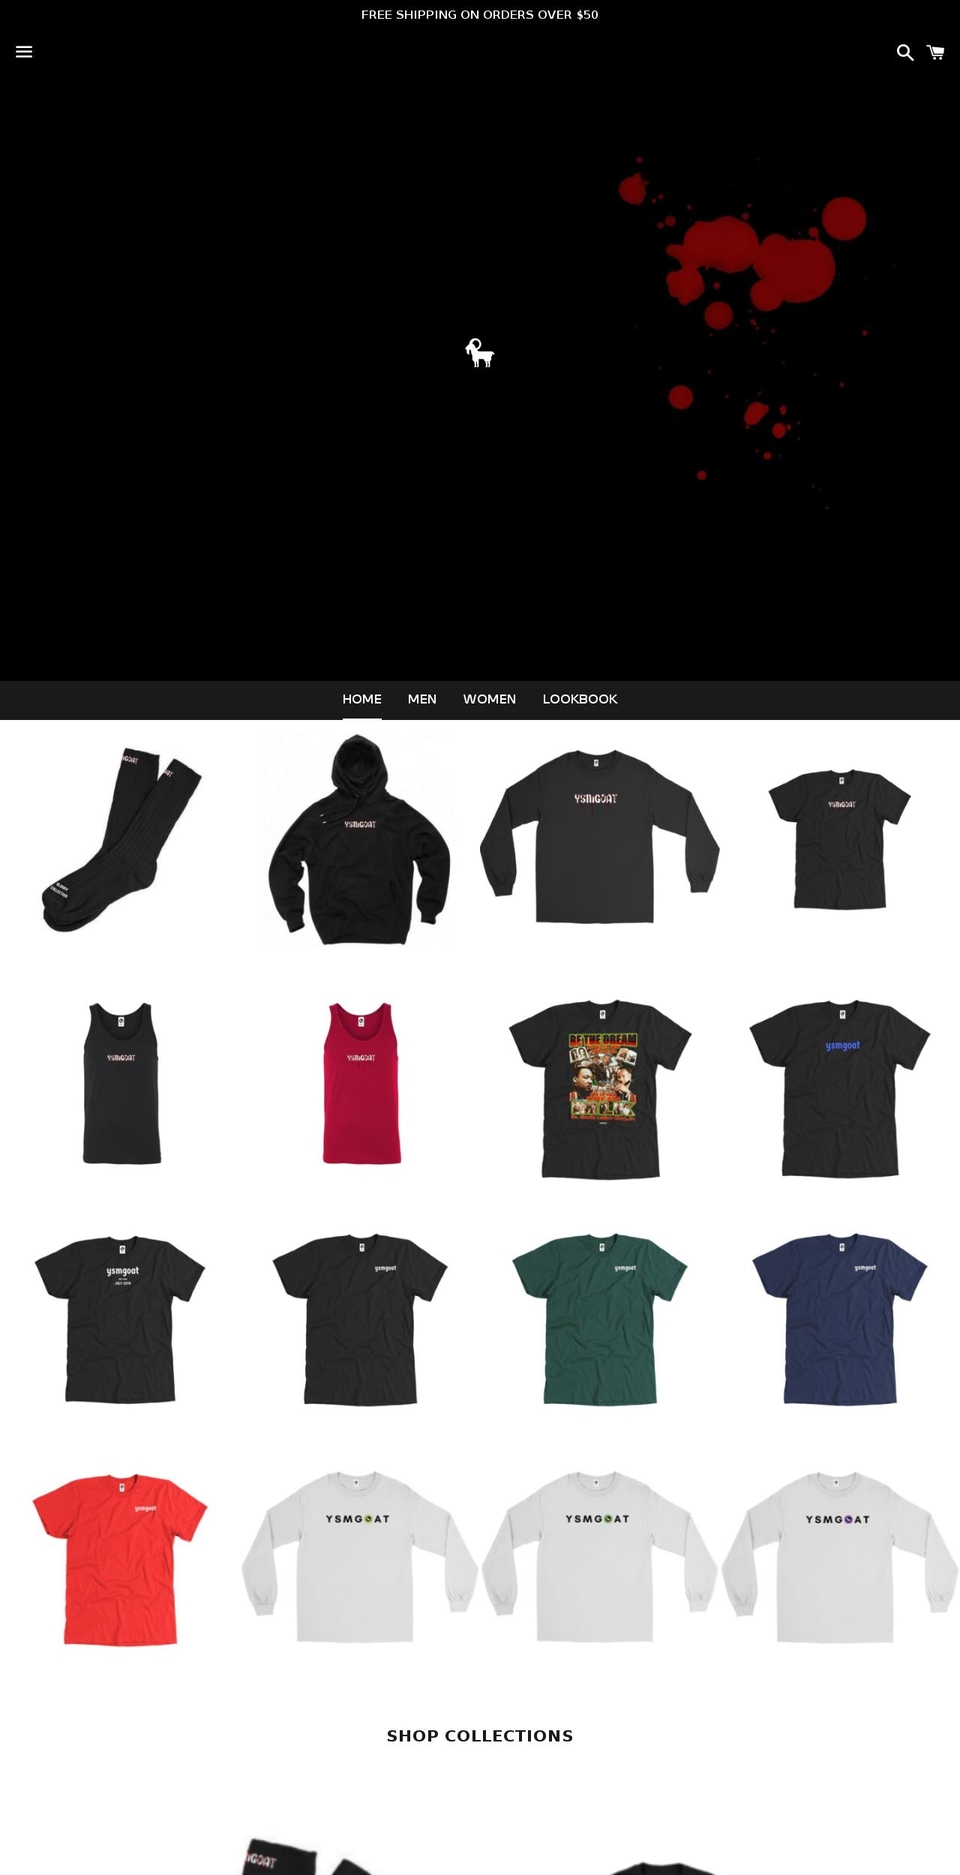 ysmgoat.store shopify website screenshot